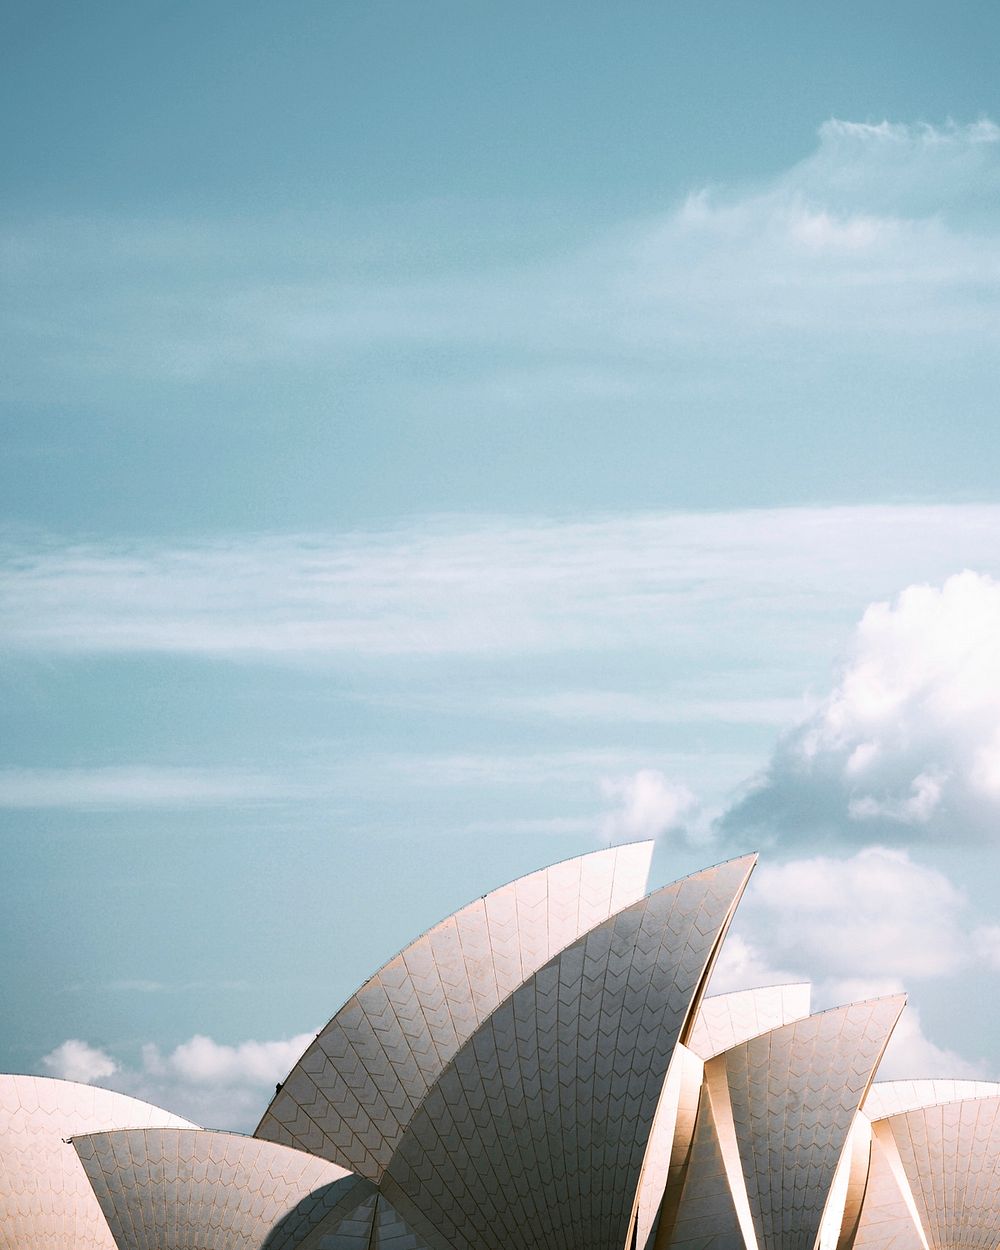 Sydney Opera House, Sydney, Australia. Original public domain image from Wikimedia Commons